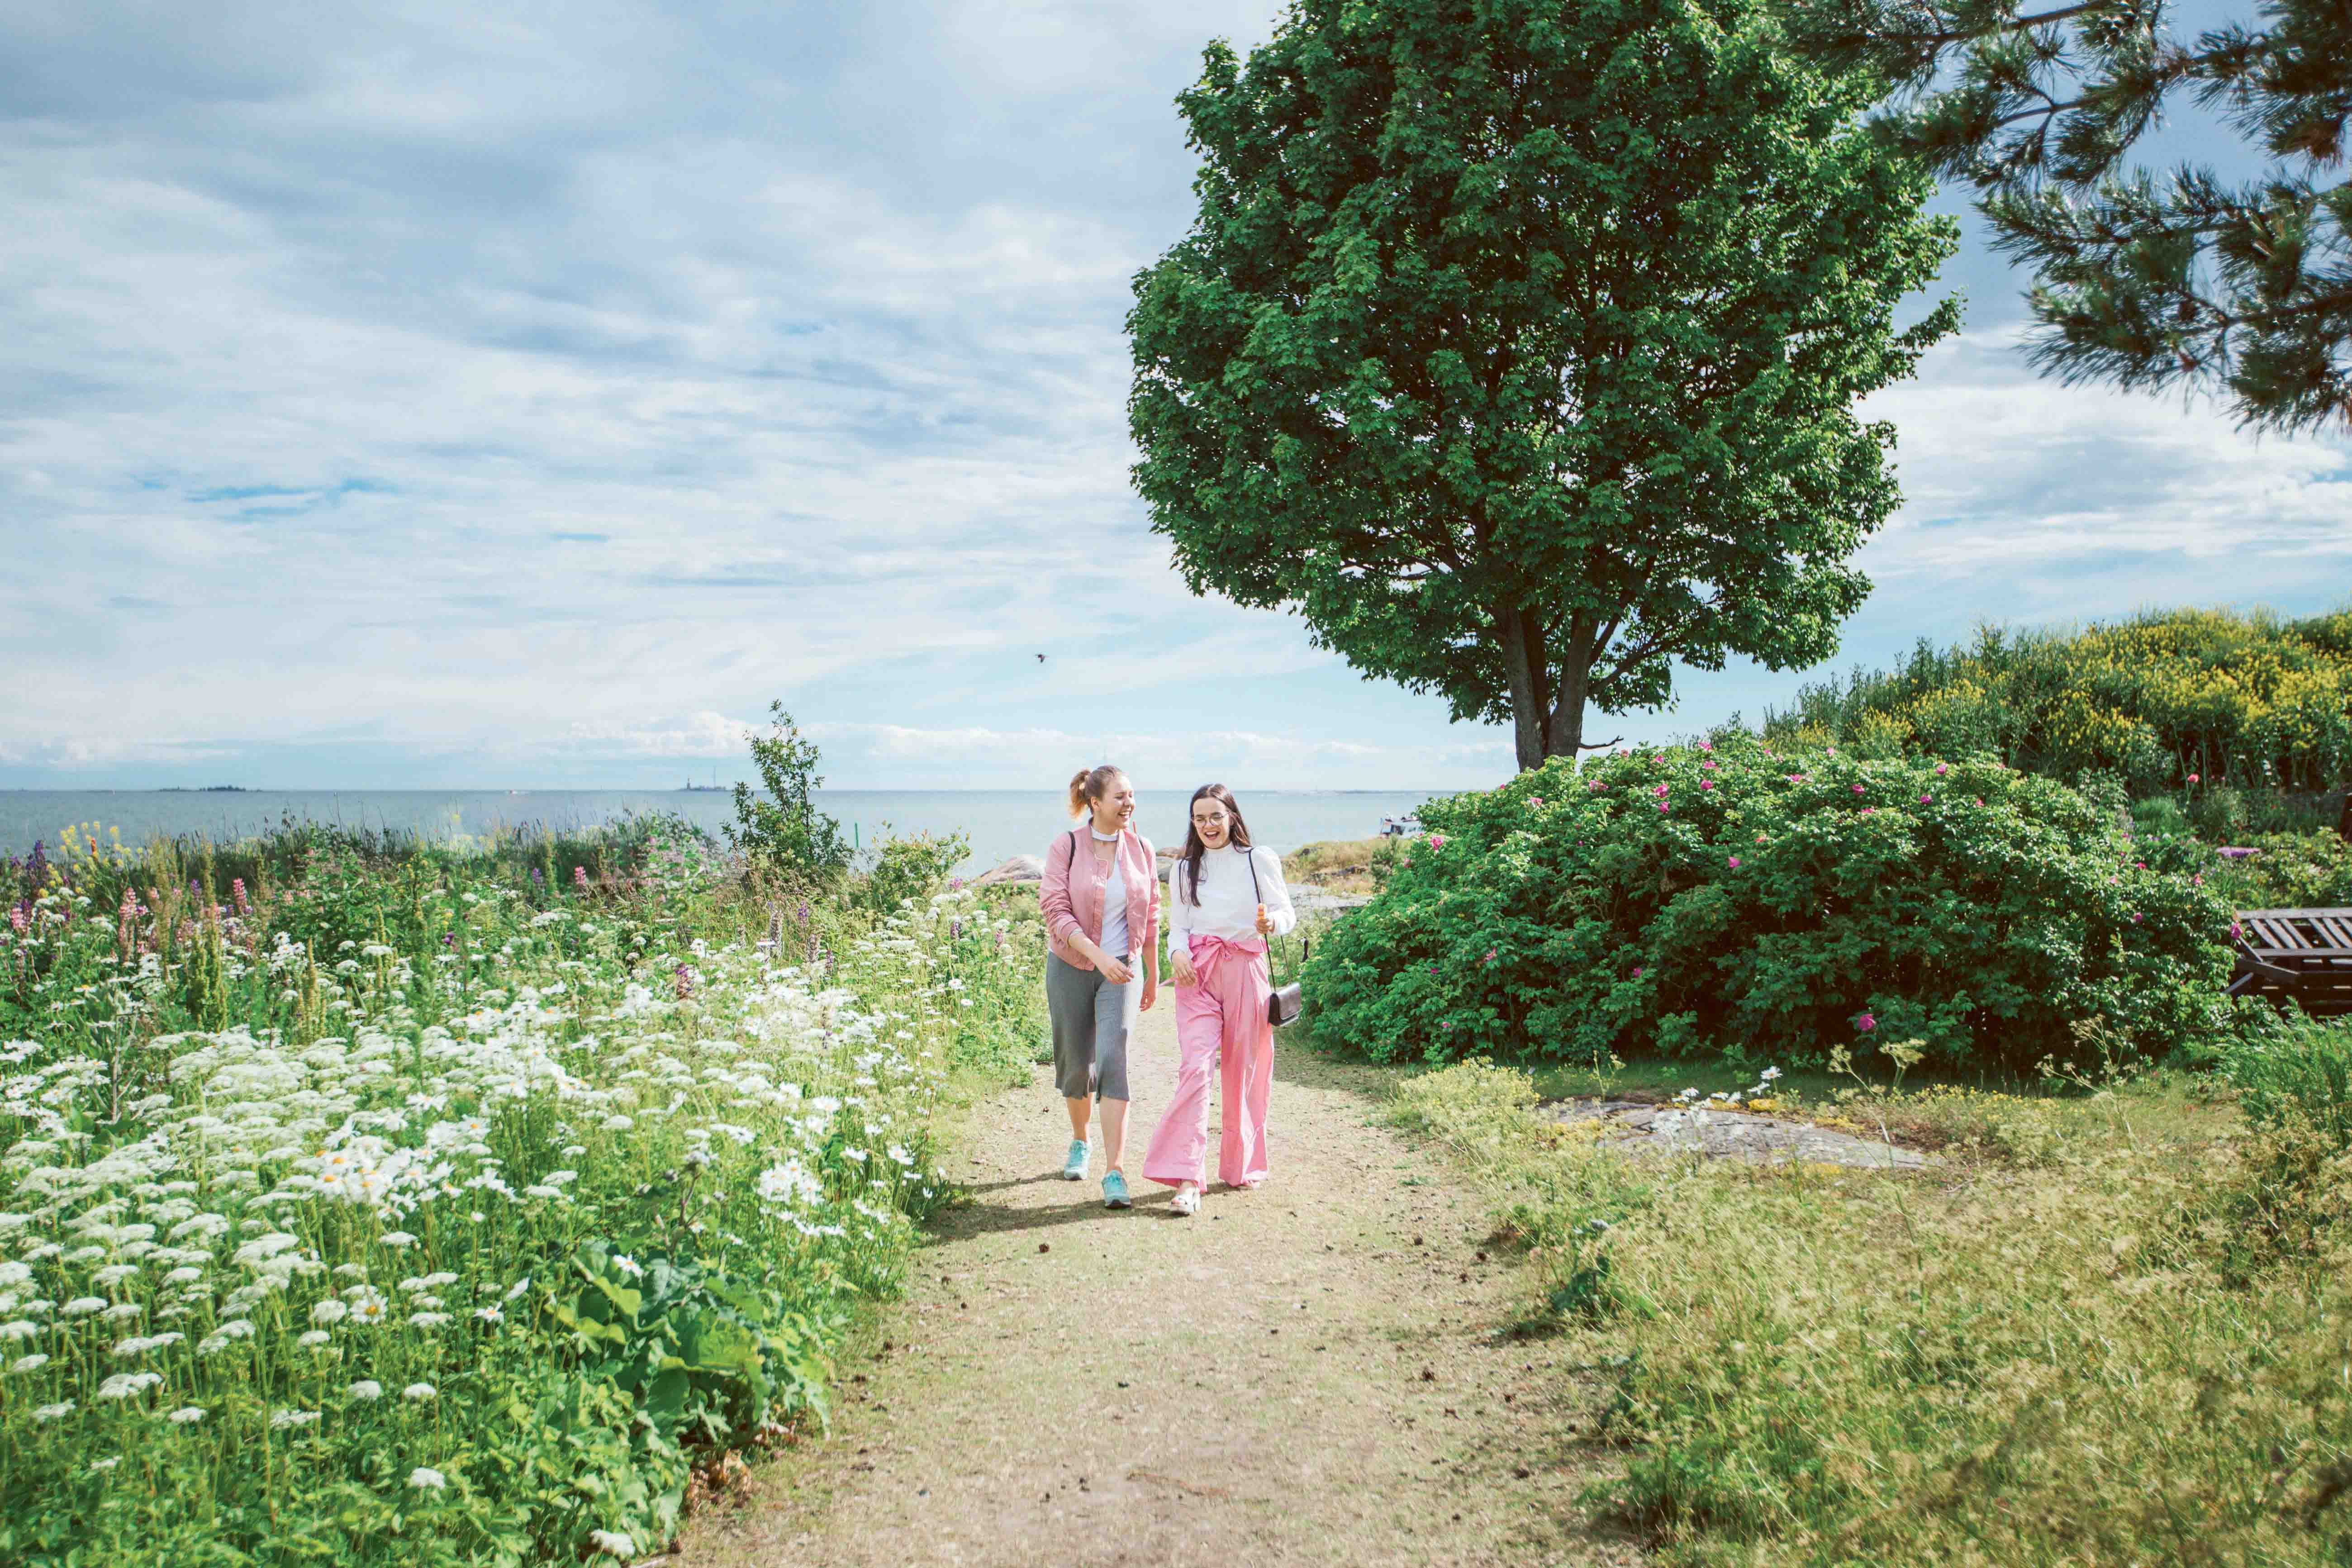 Two women walking in a nature trail in Suomenlinna fortress island